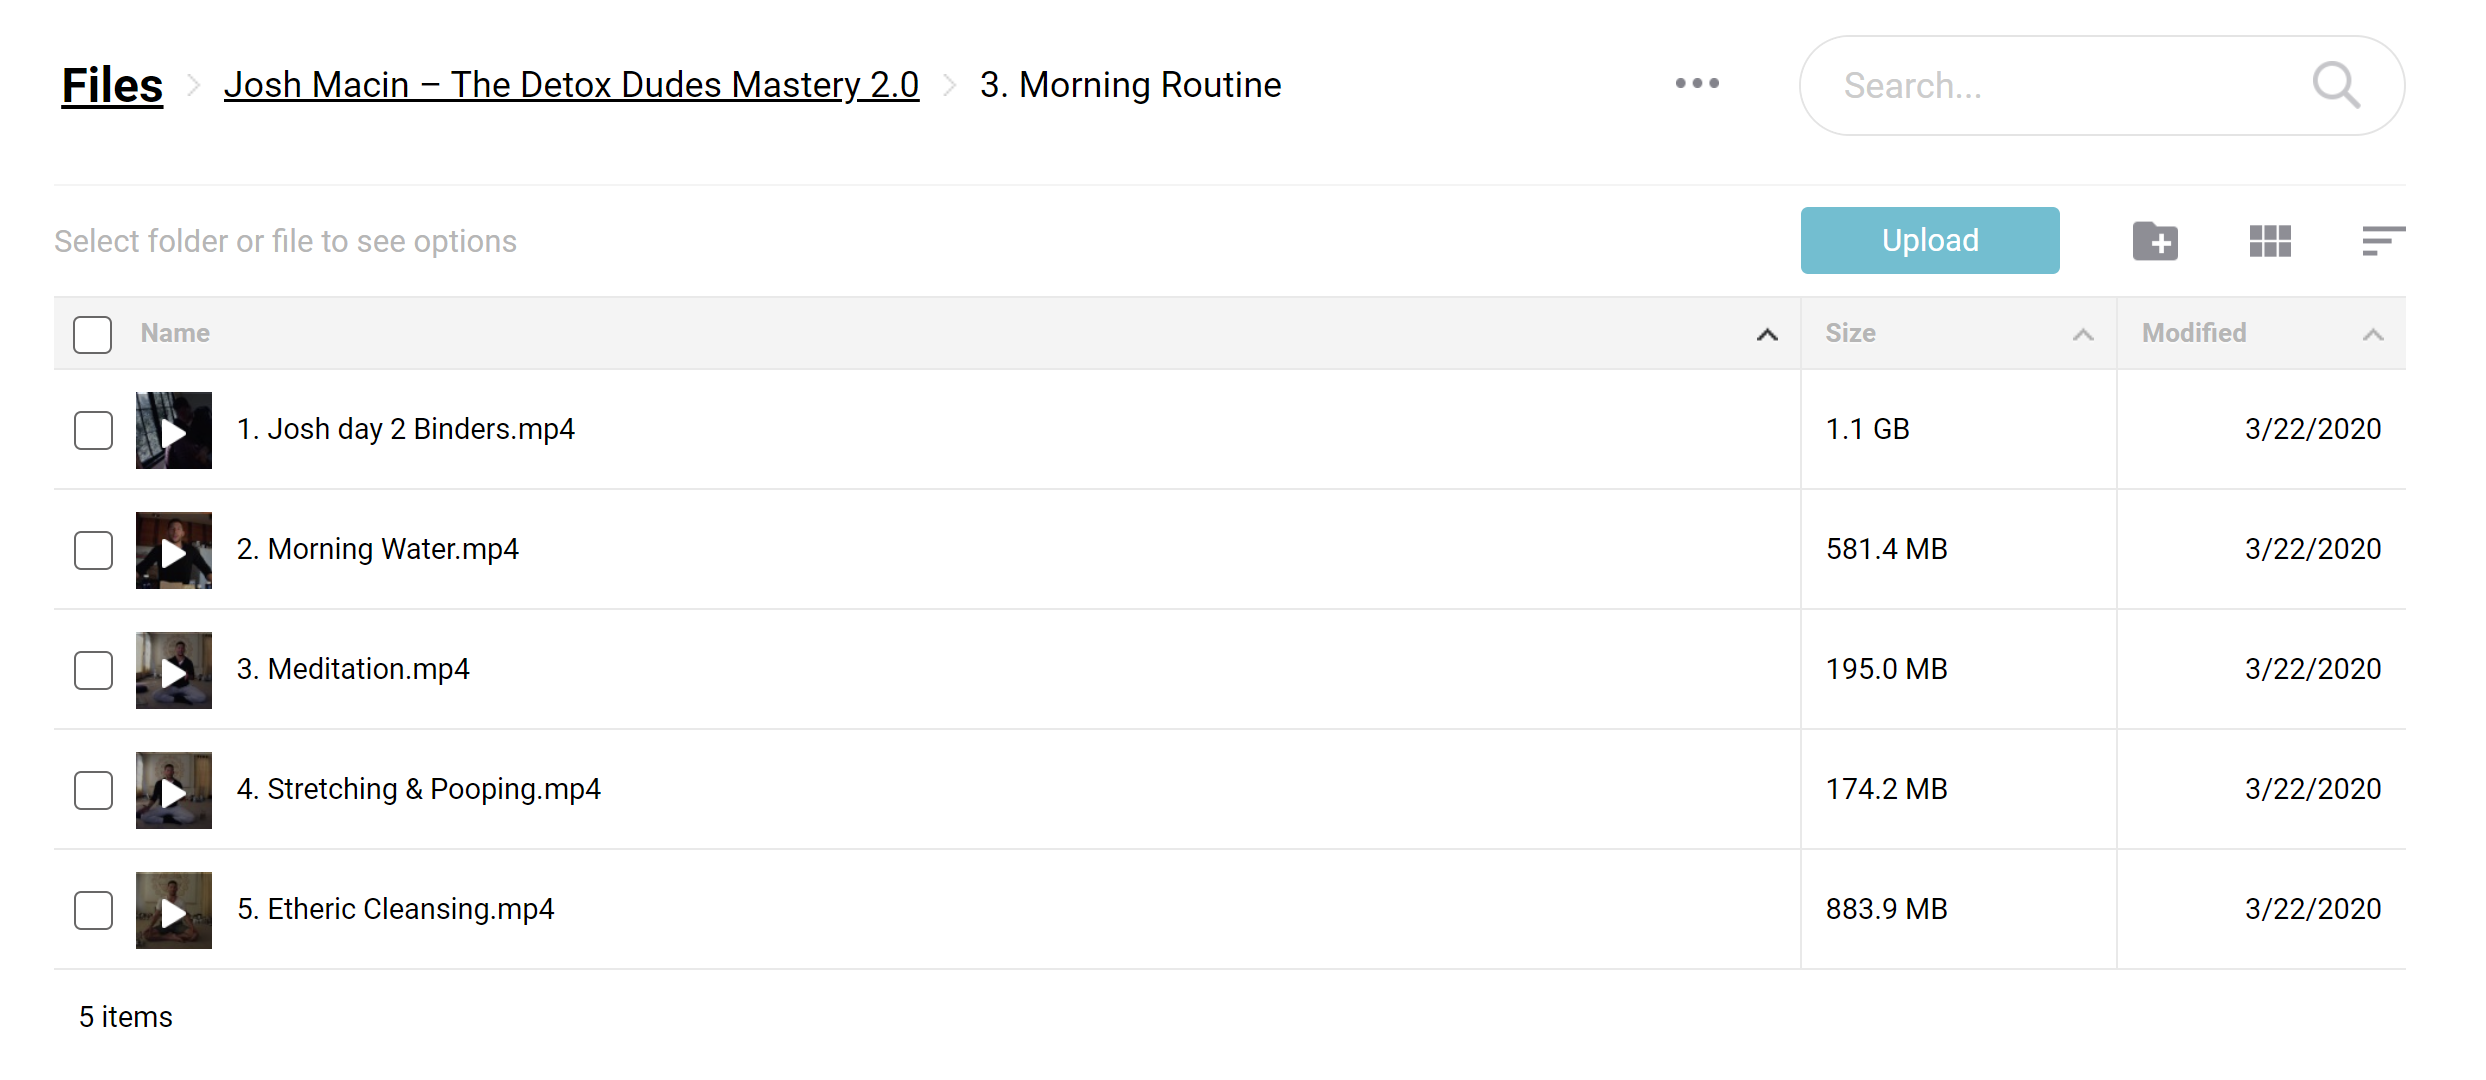 Josh Macin The Detox Dudes Mastery 2.0 Morning Routines